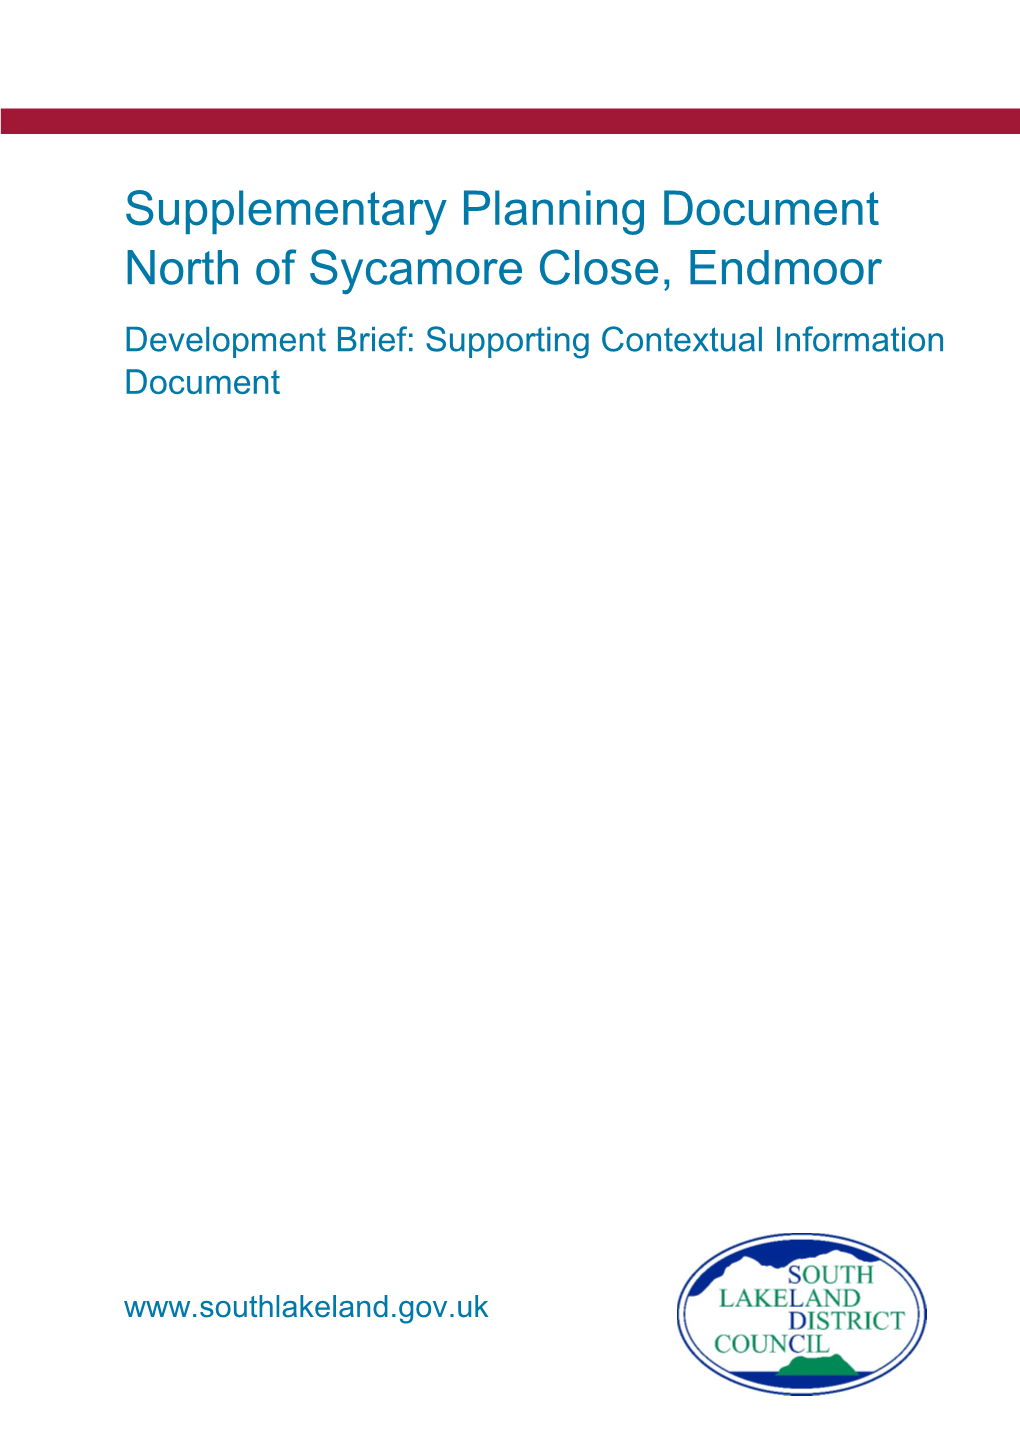 Development Brief North of Sycamore Close, Endmoor